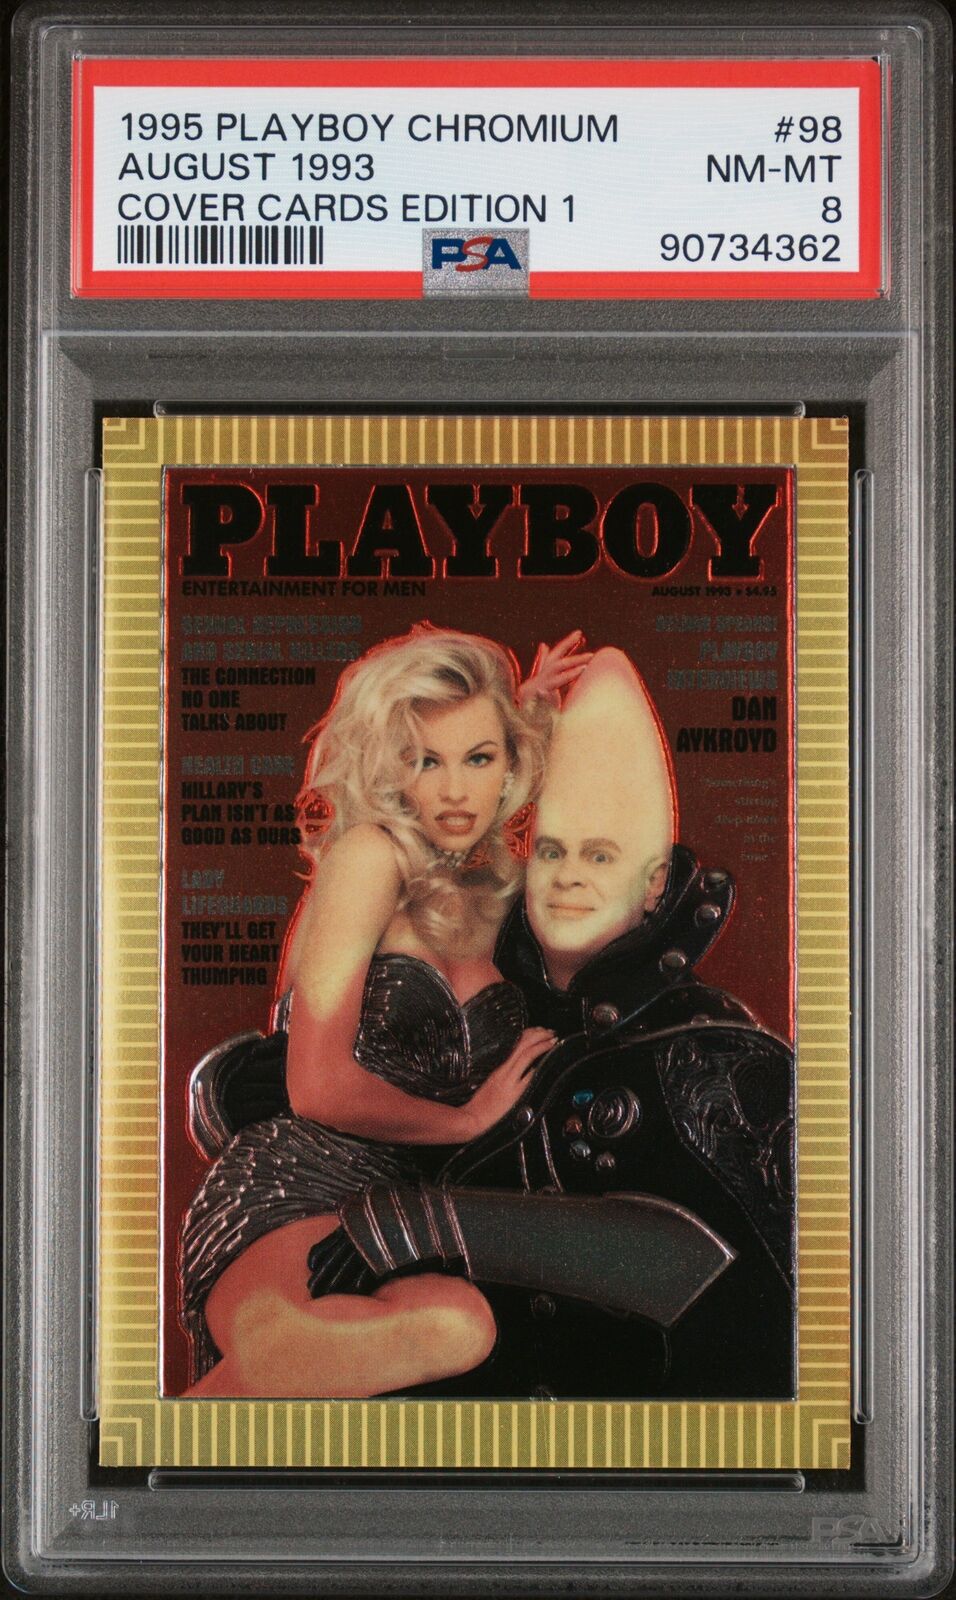 1995 Playboy Chromium Cover Edition 1 August 1993 Pamela Anderson #98 PSA 8